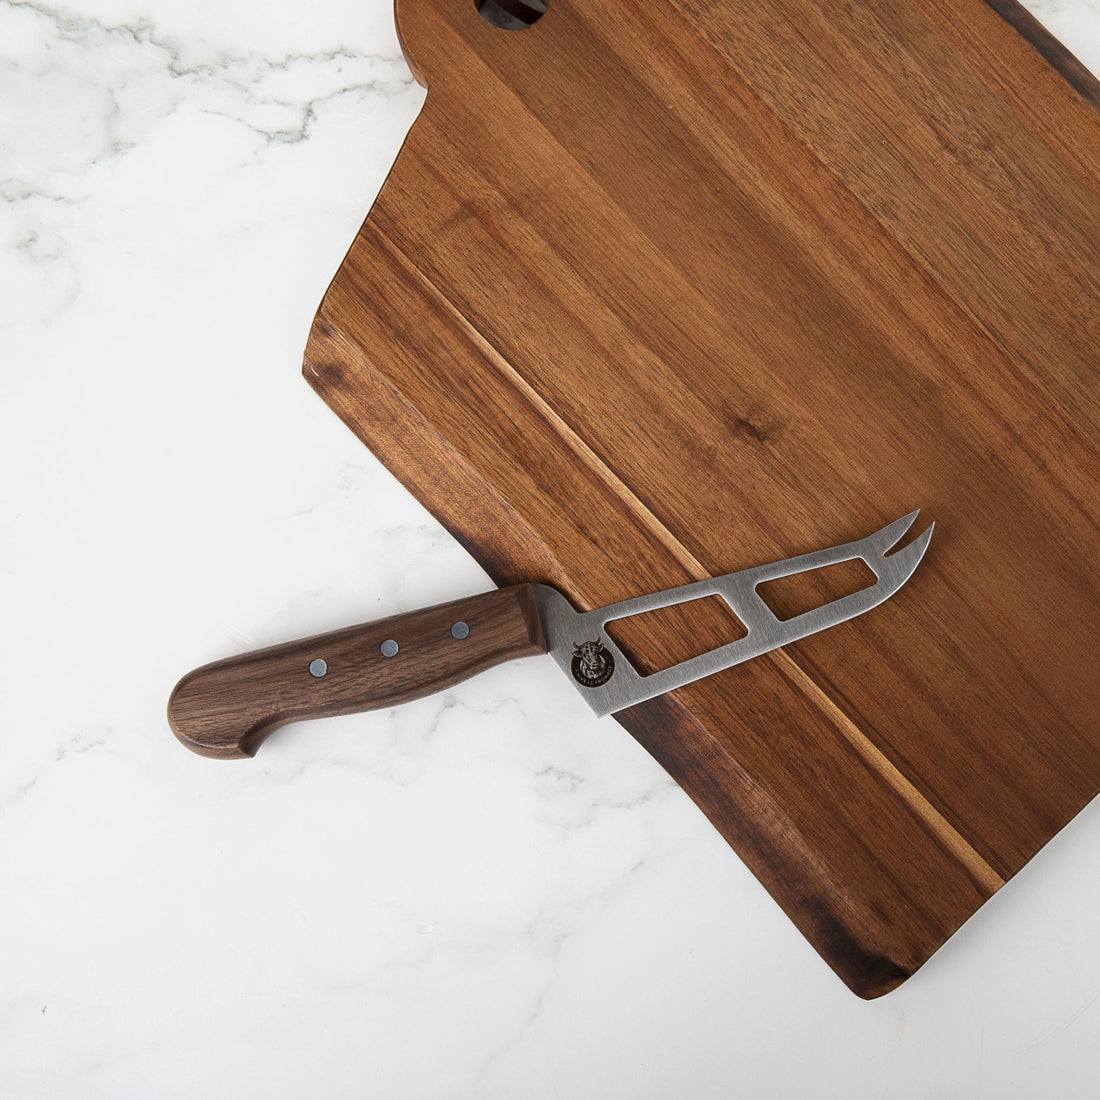 Mini 4 Knife Set – Formaticum